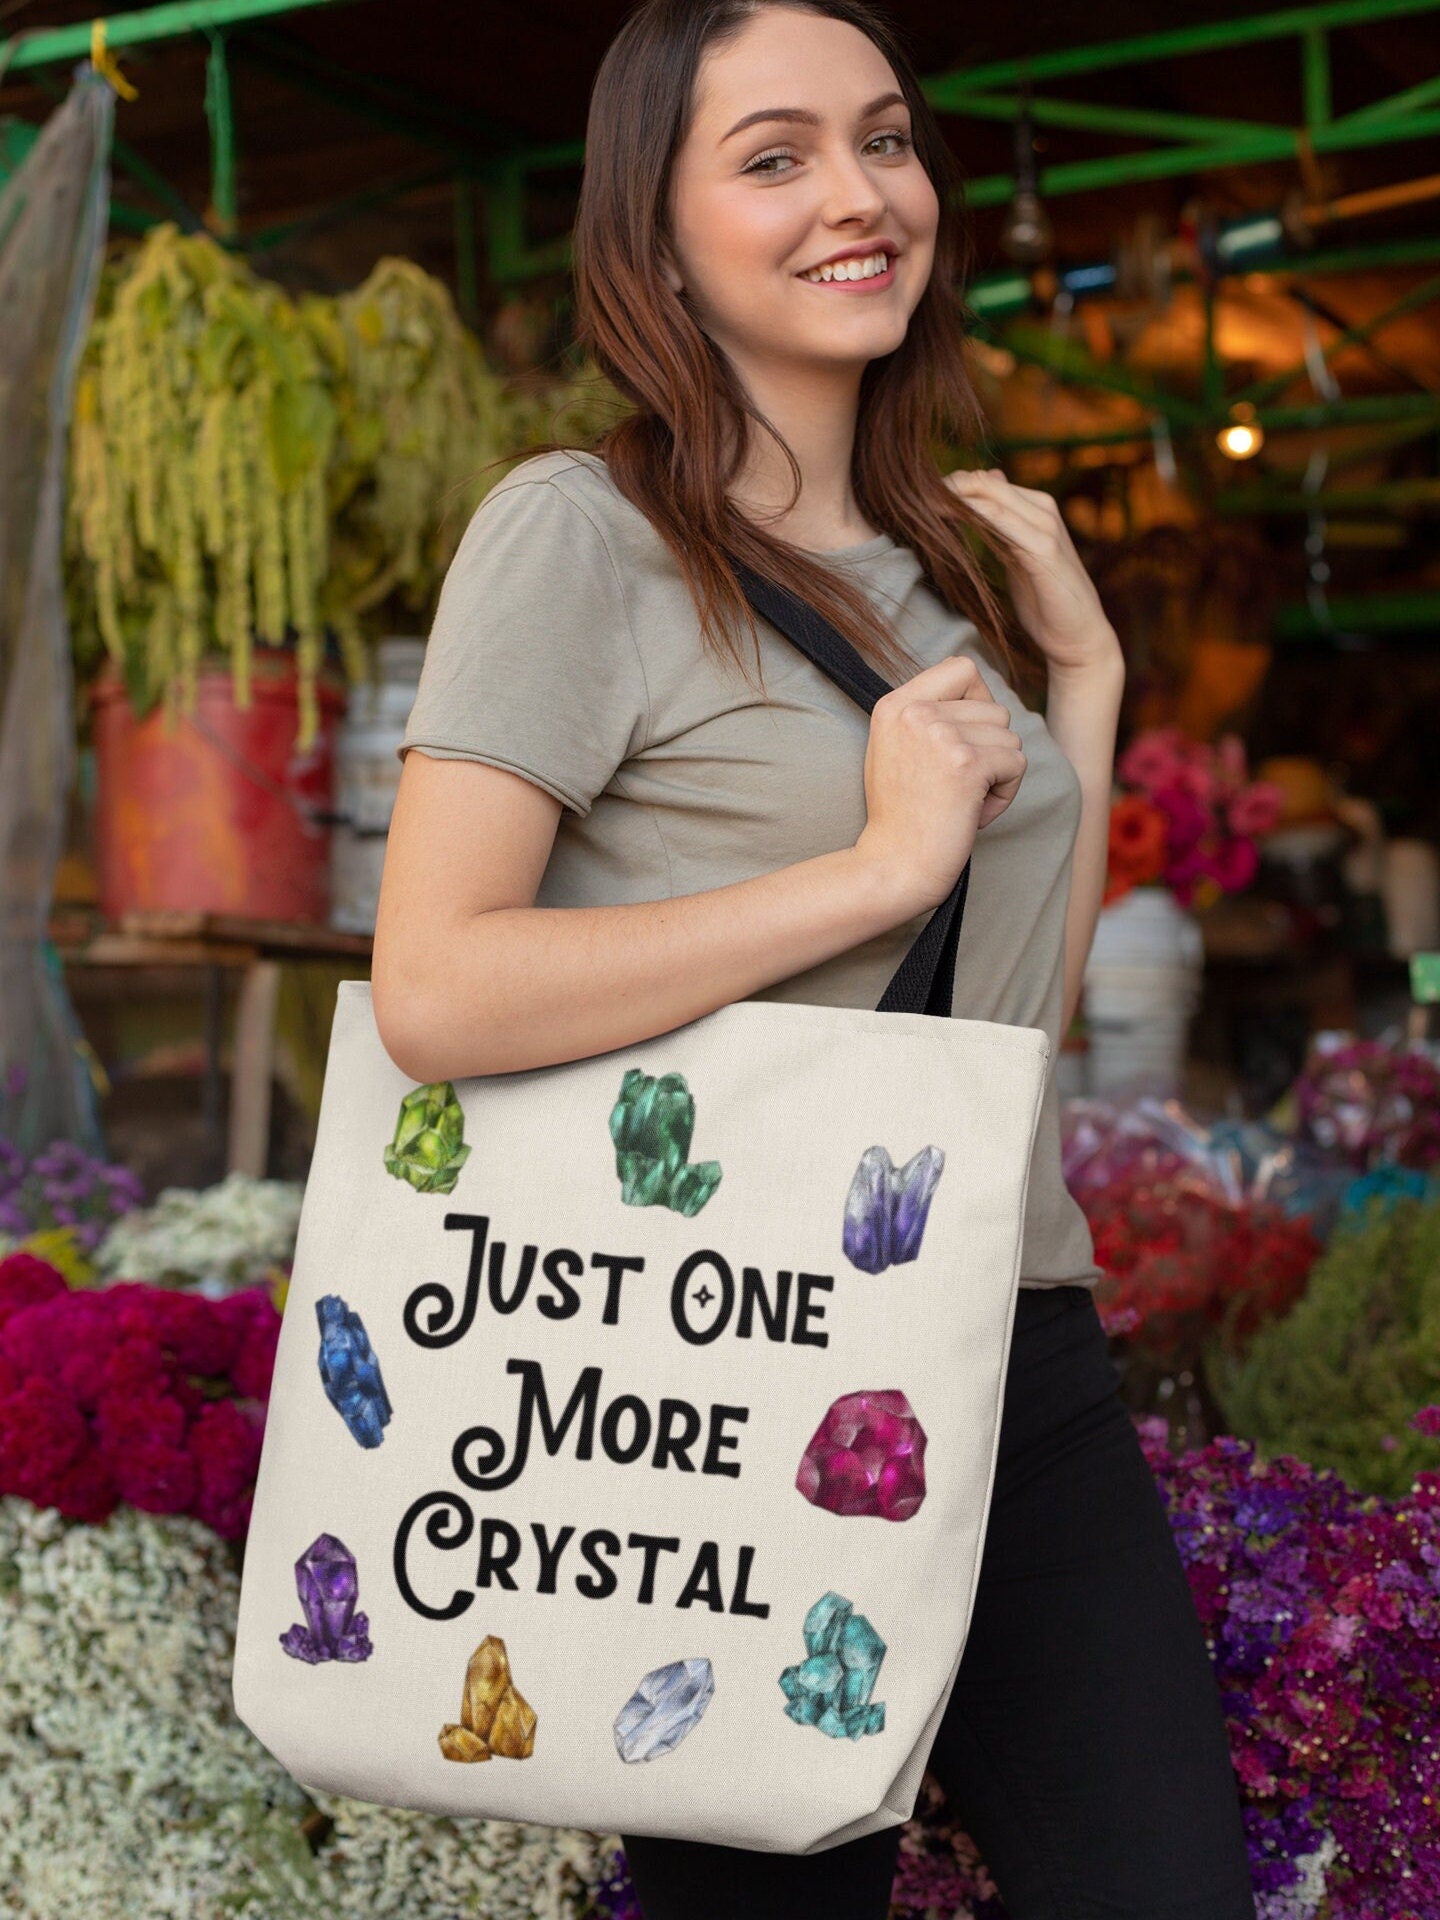 Crystal Tote Bag, Gemstone Bag, Reusable Tote Bag, Crystal Lover Gift, Just One More Crystal, Trendy Tote Bag, Witchy Gifts, Witchy Tote Bag